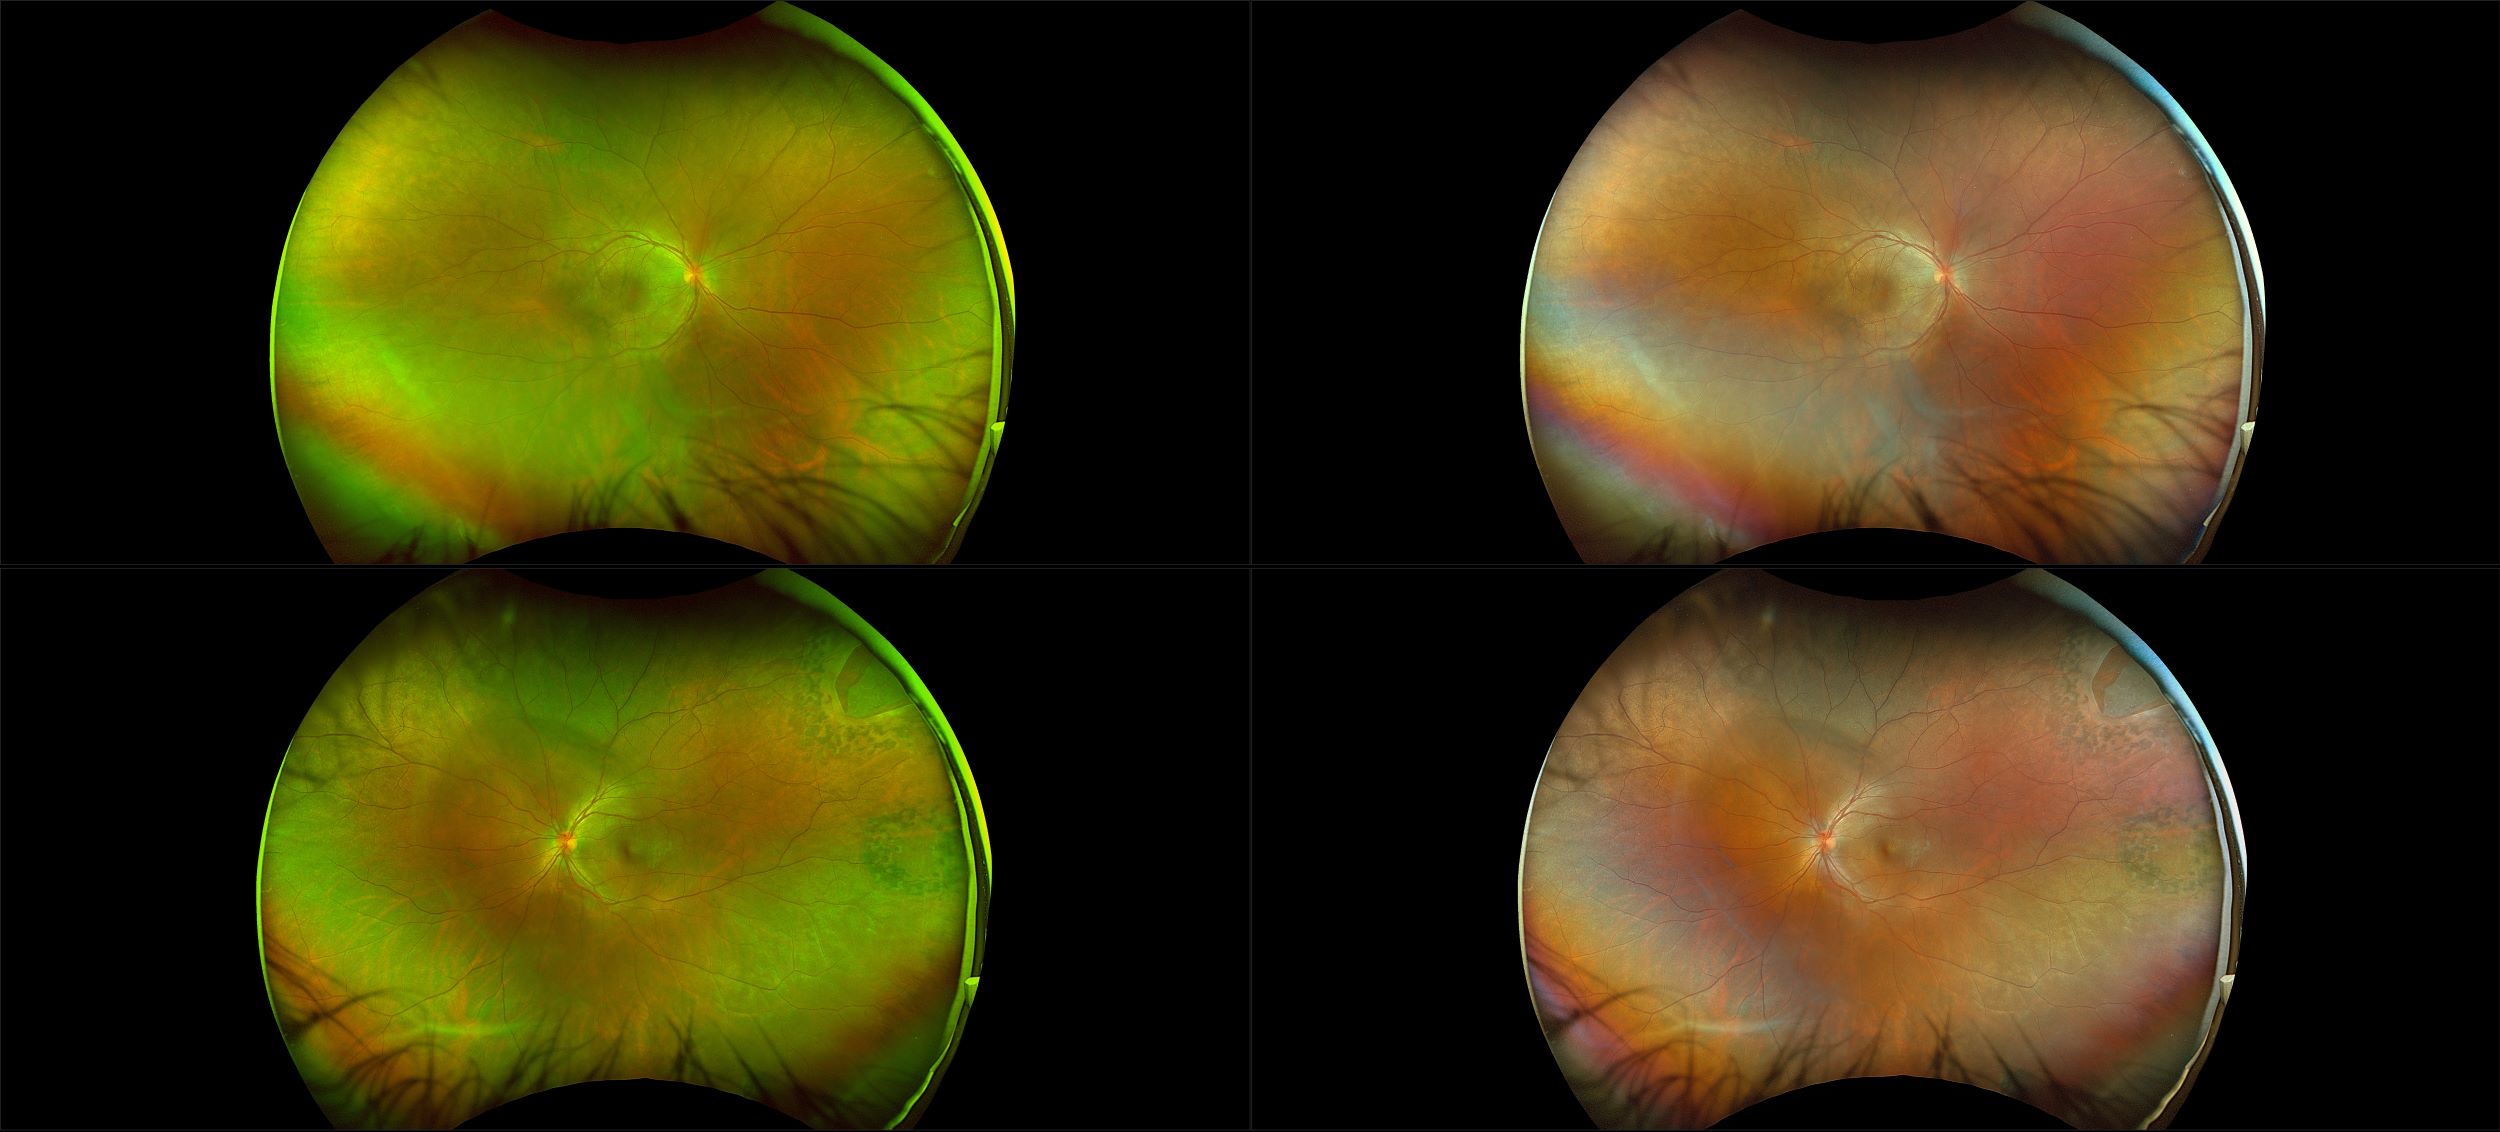 California - Retinal Tear with Posterior Uveitis, RG, RGB